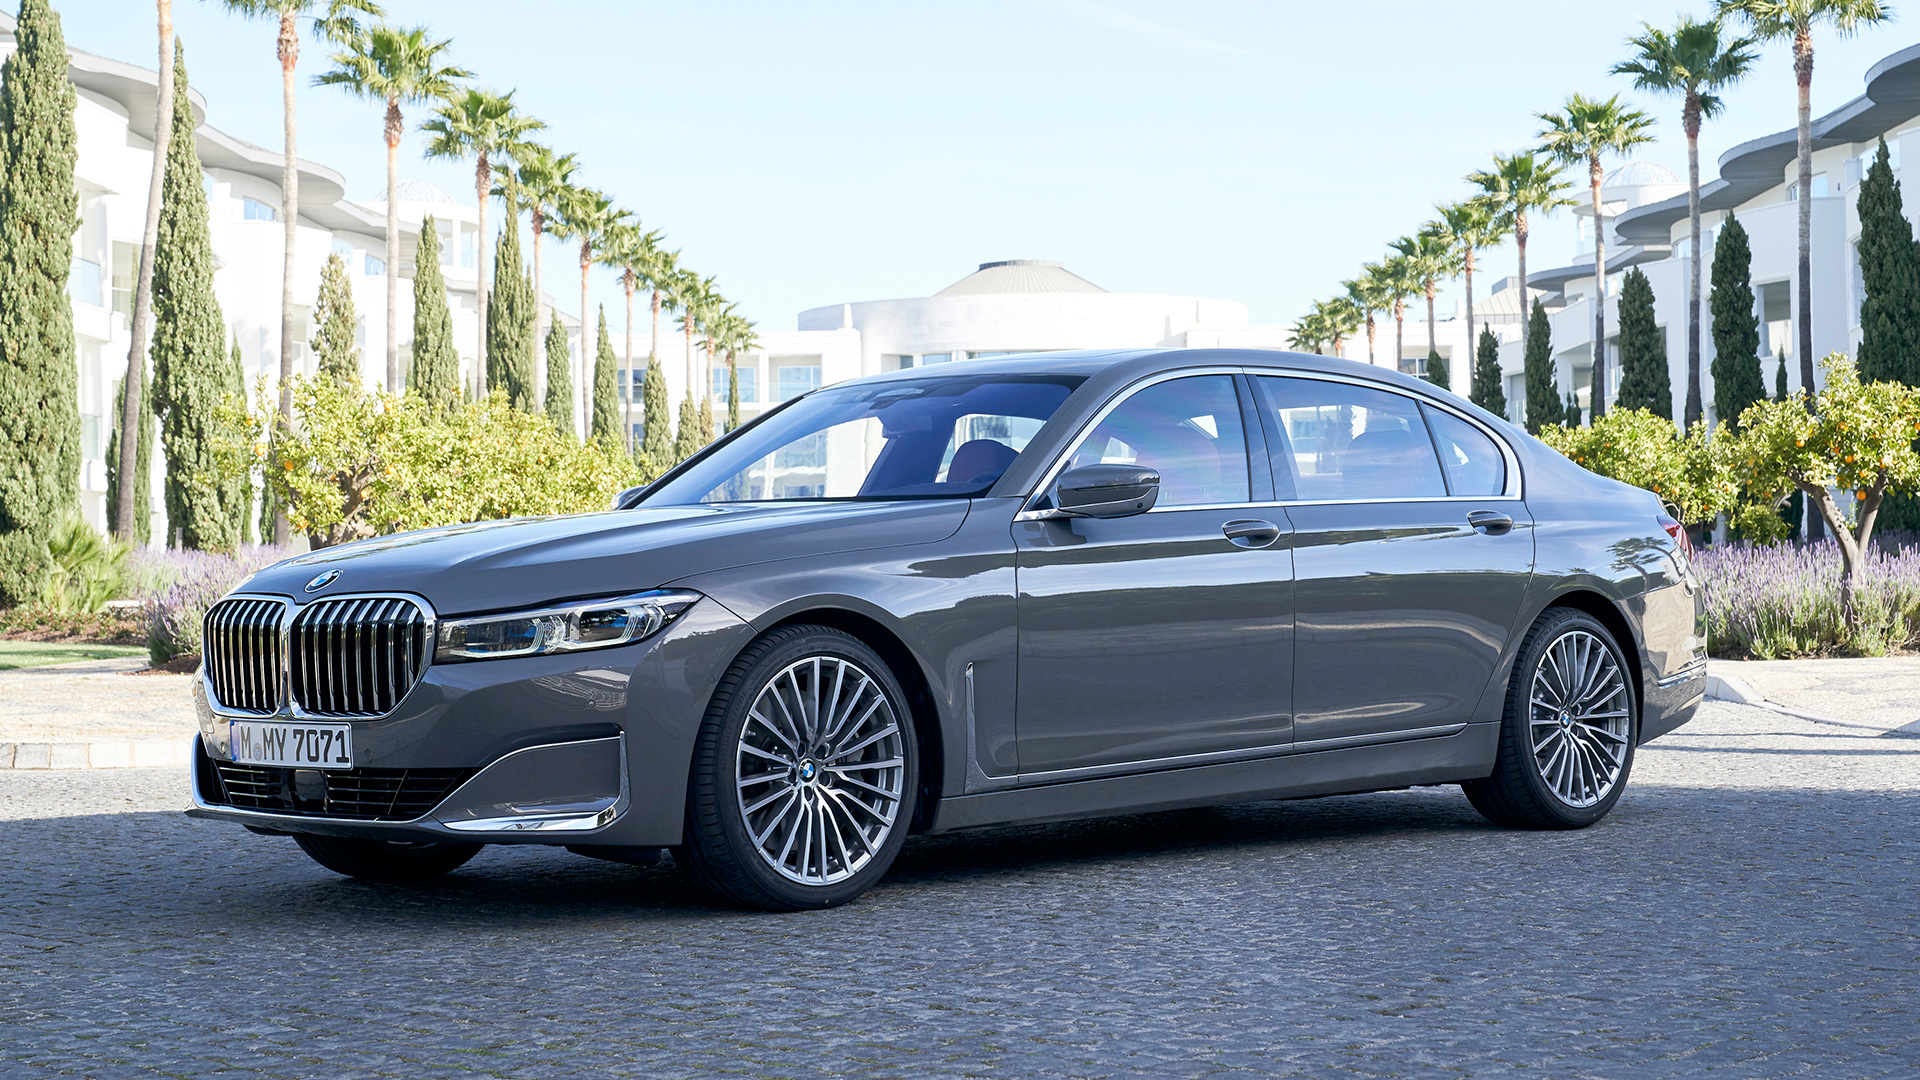 BMW 7 series 2019 730Ld Design Pure Excellence Signature Exterior